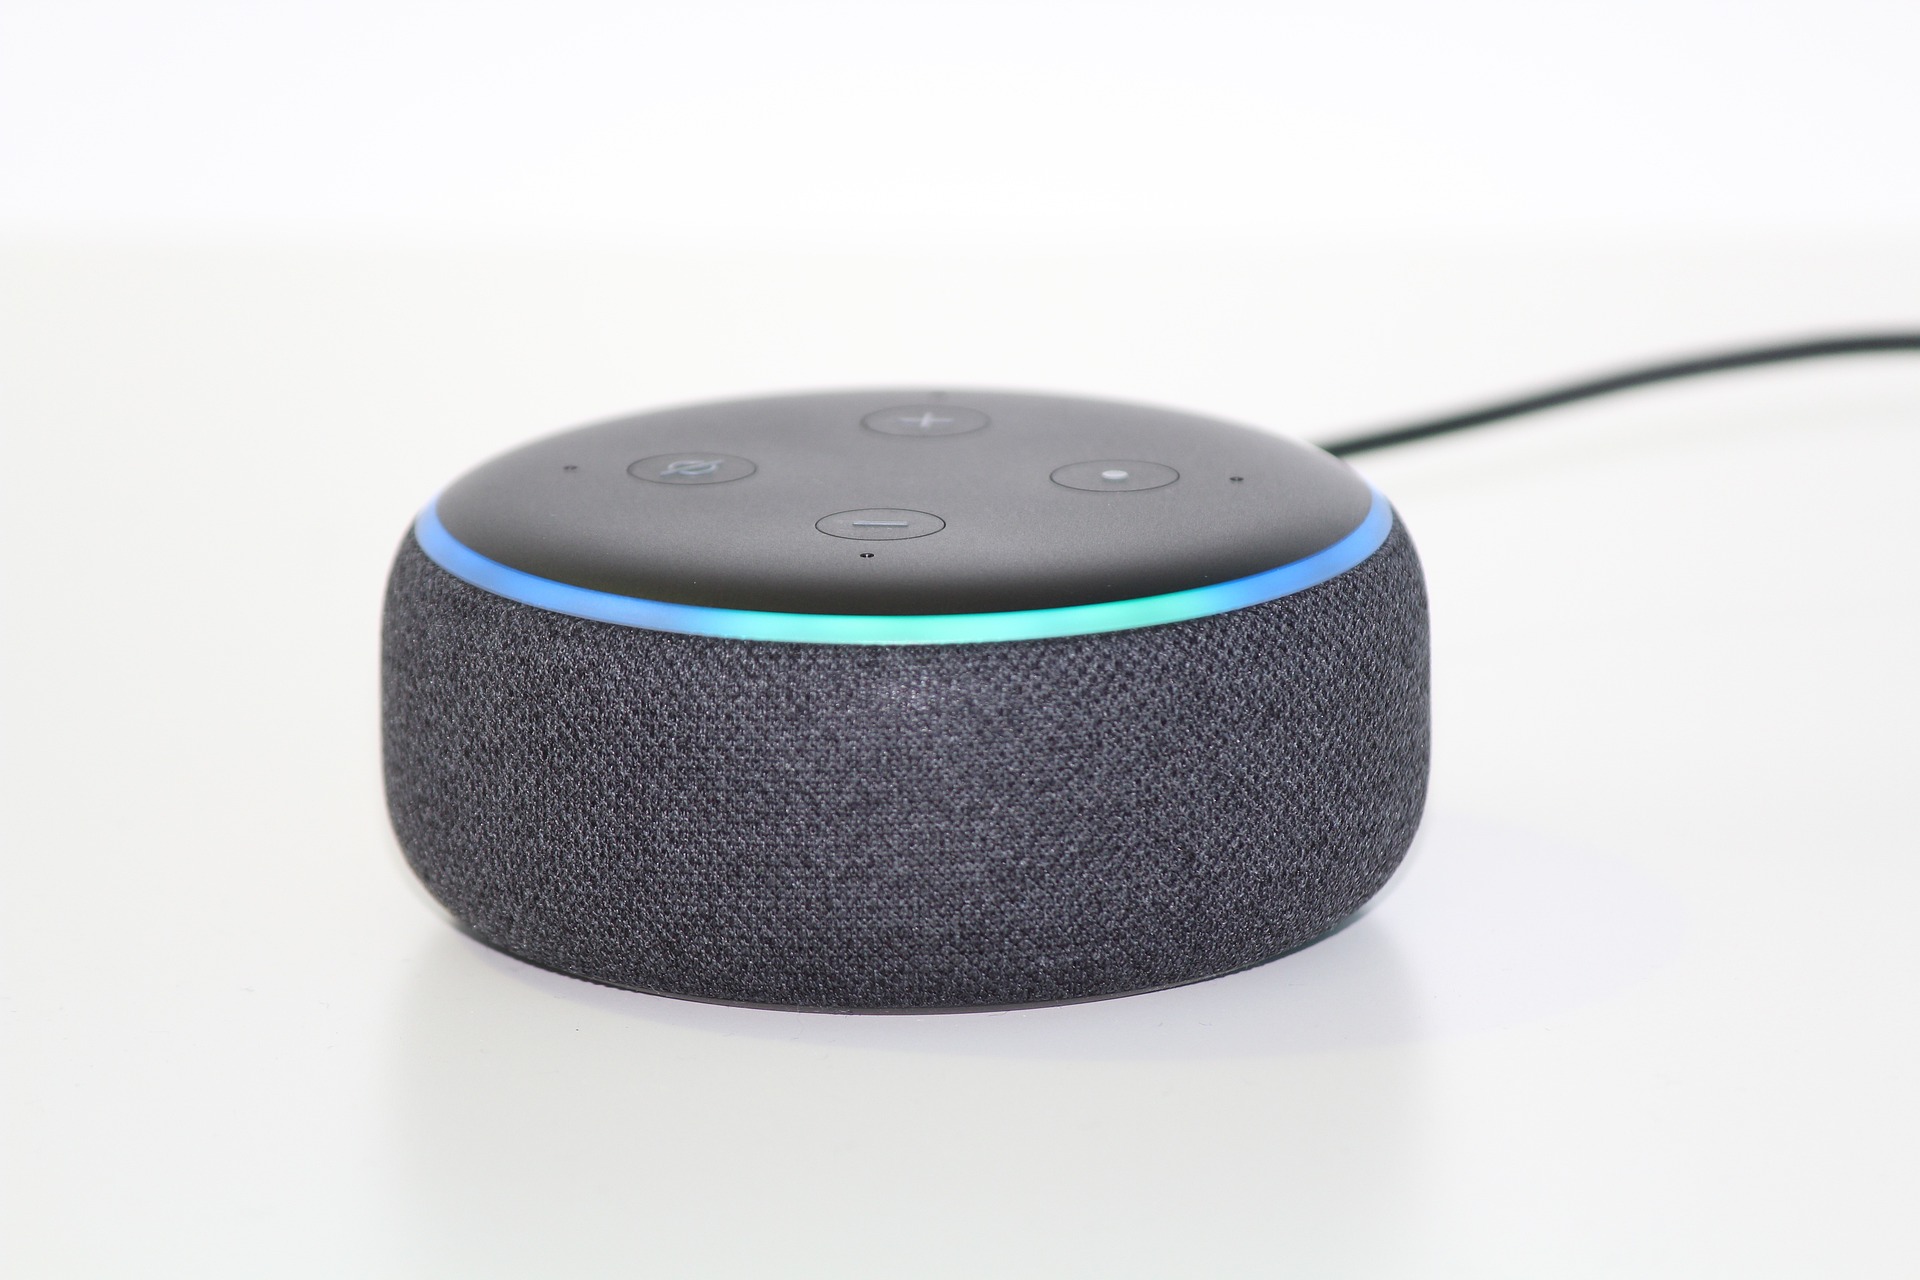 How To Reset Alexa On Your Amazon Echo